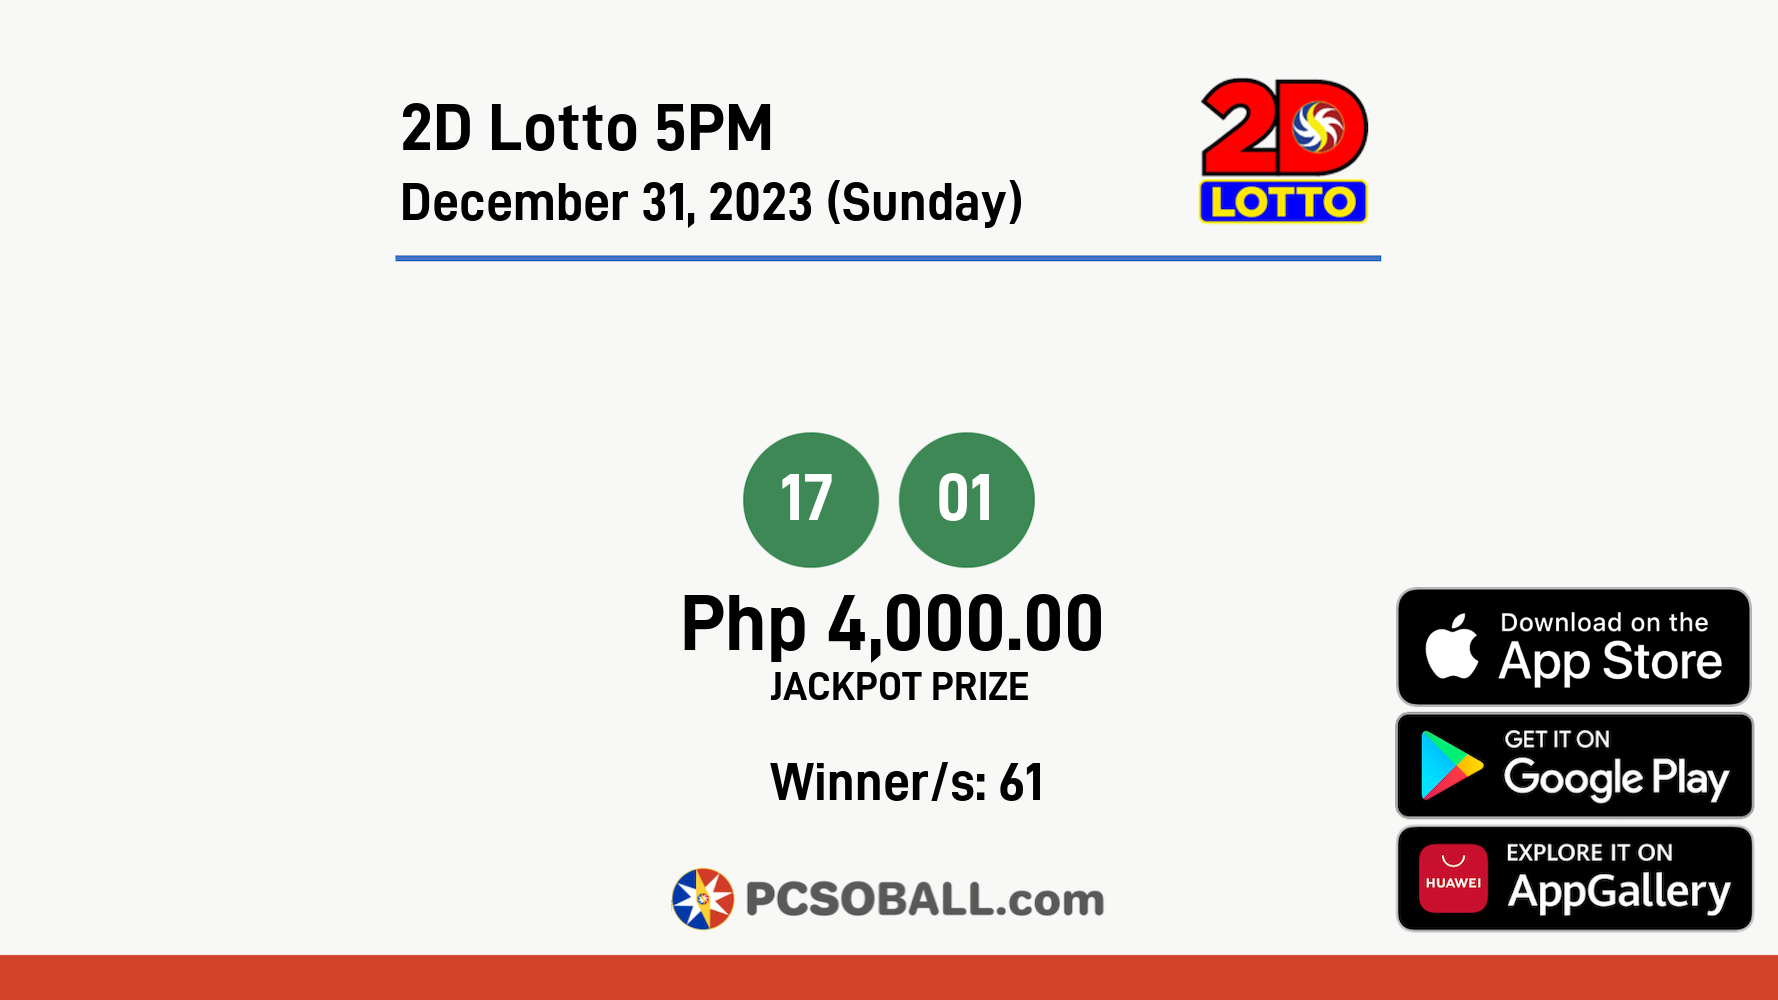 2D Lotto 5PM December 31, 2023 (Sunday) Result